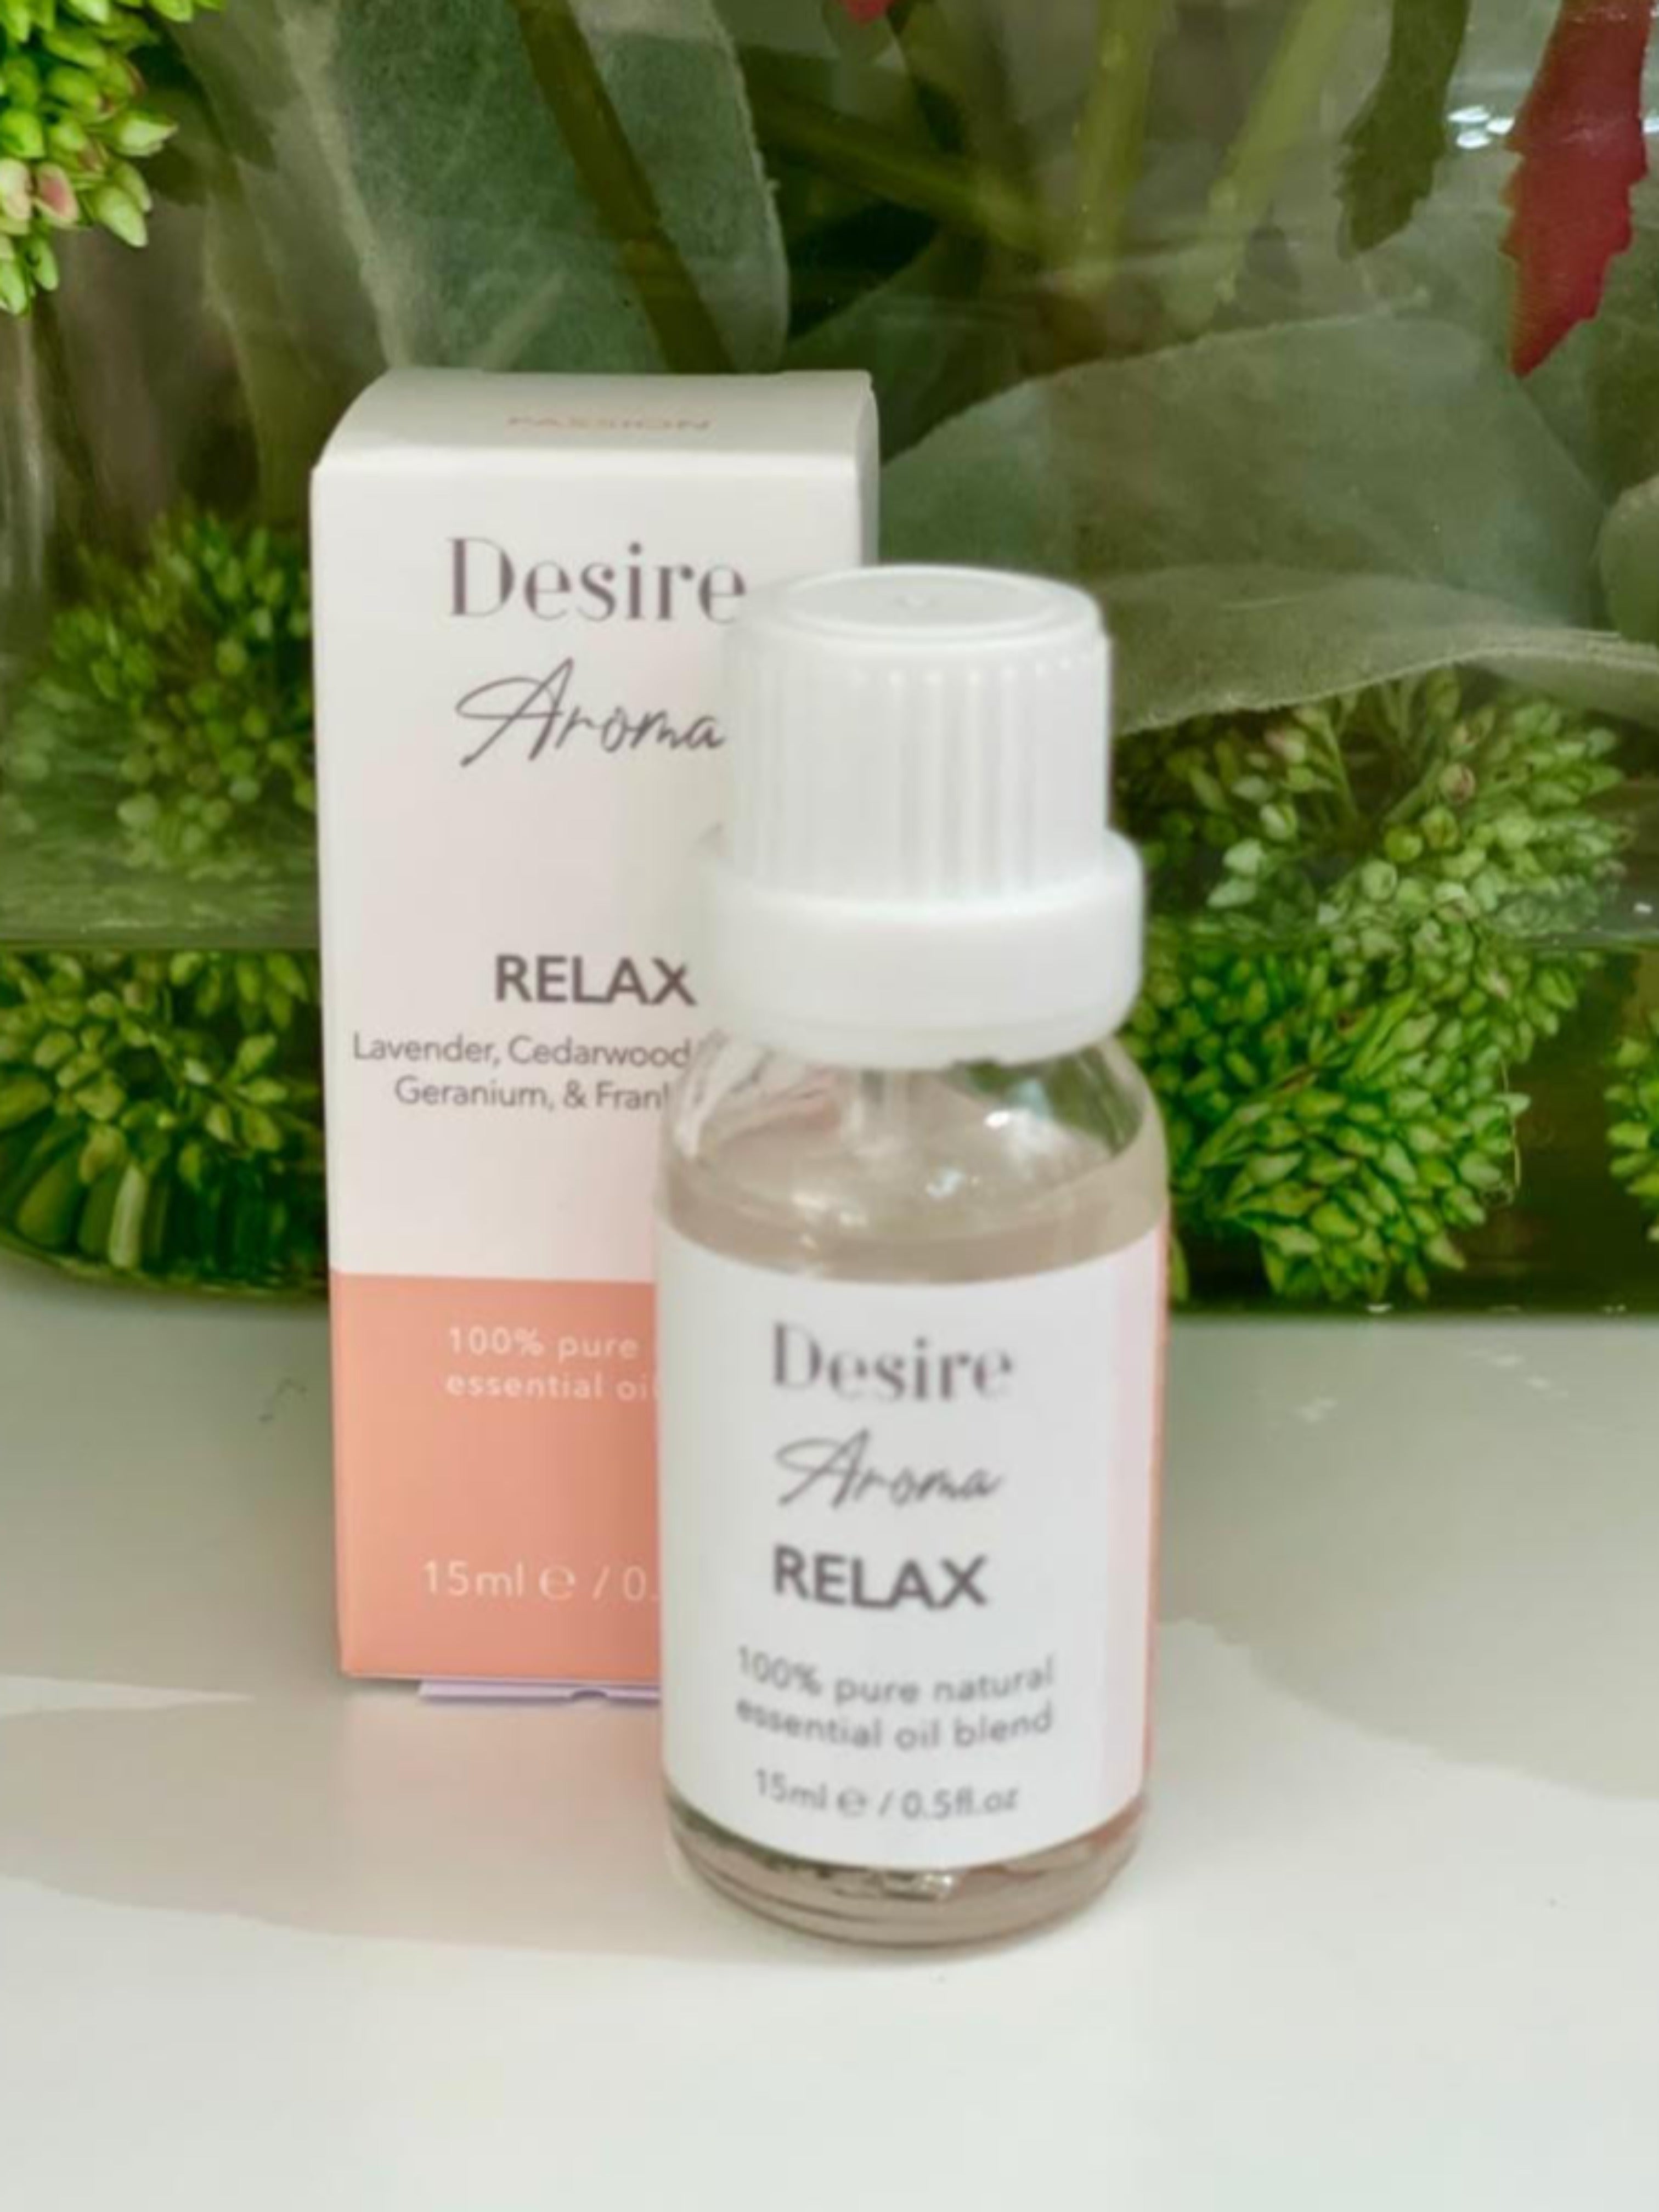 Desire Aroma Relax Fragrance Oil